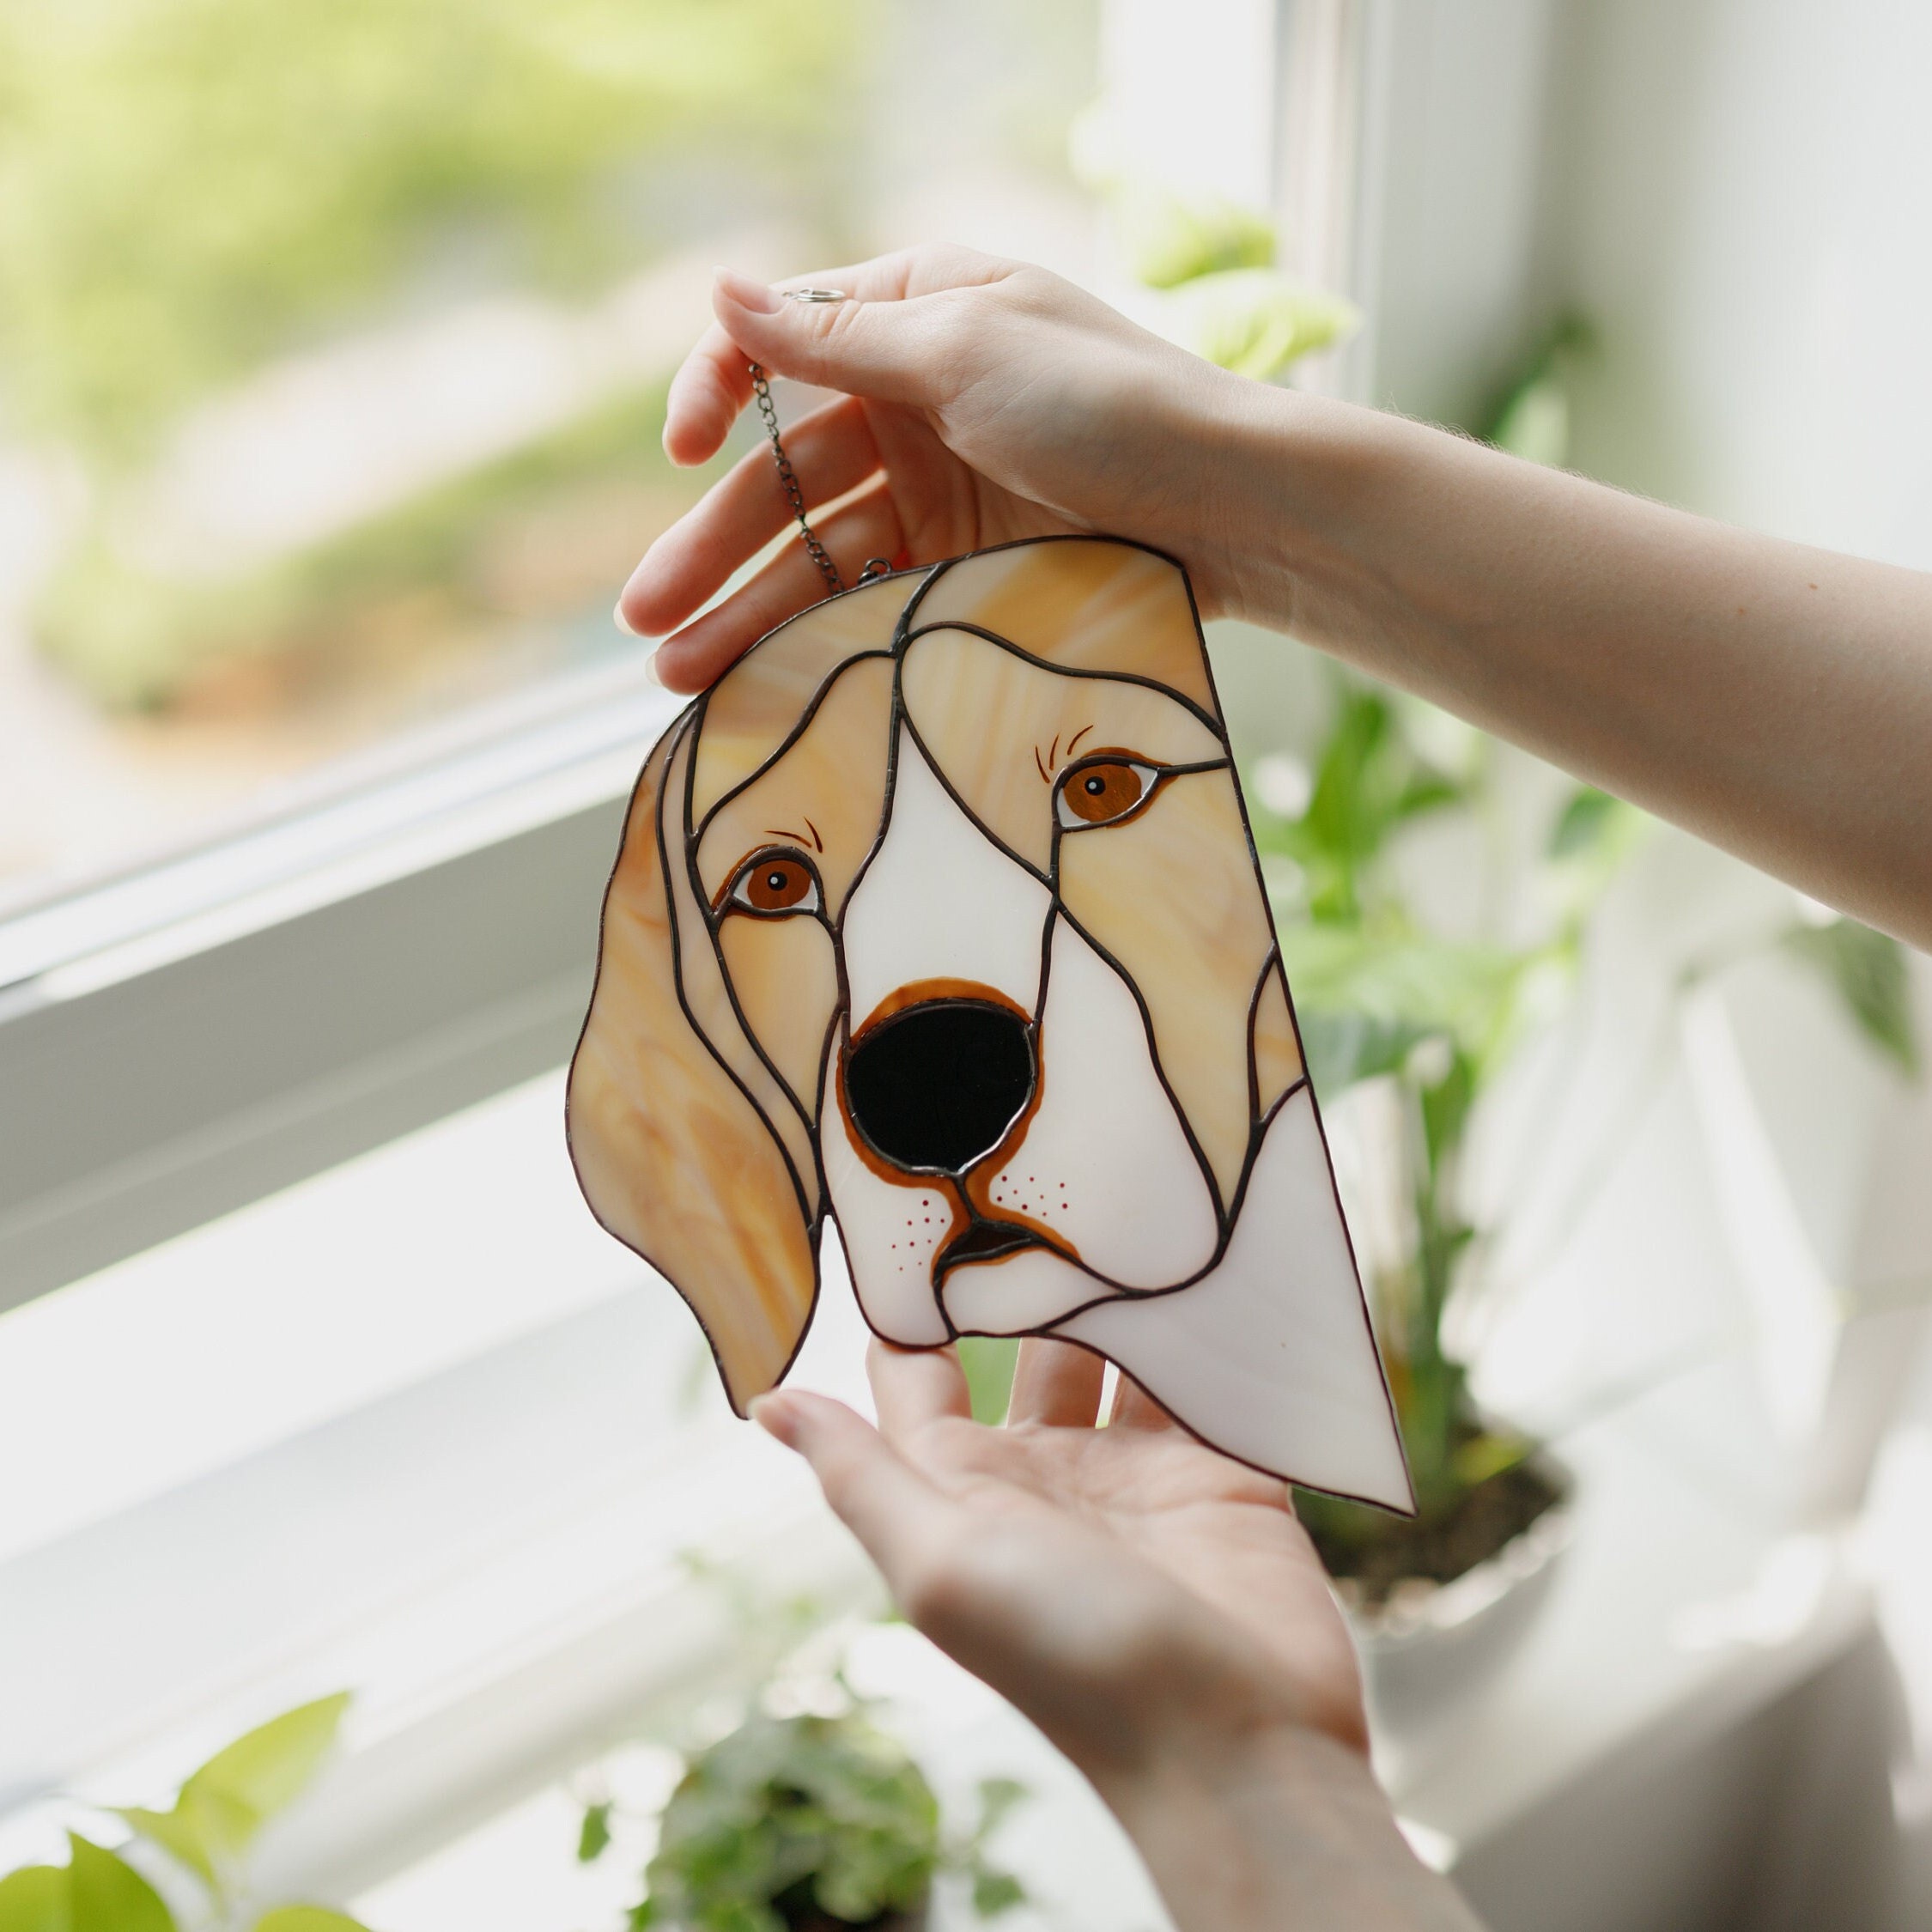 DIAMOND PAINTING KIT Beagle Dog Diamond Dotz Me Animal Picture -  Sweden